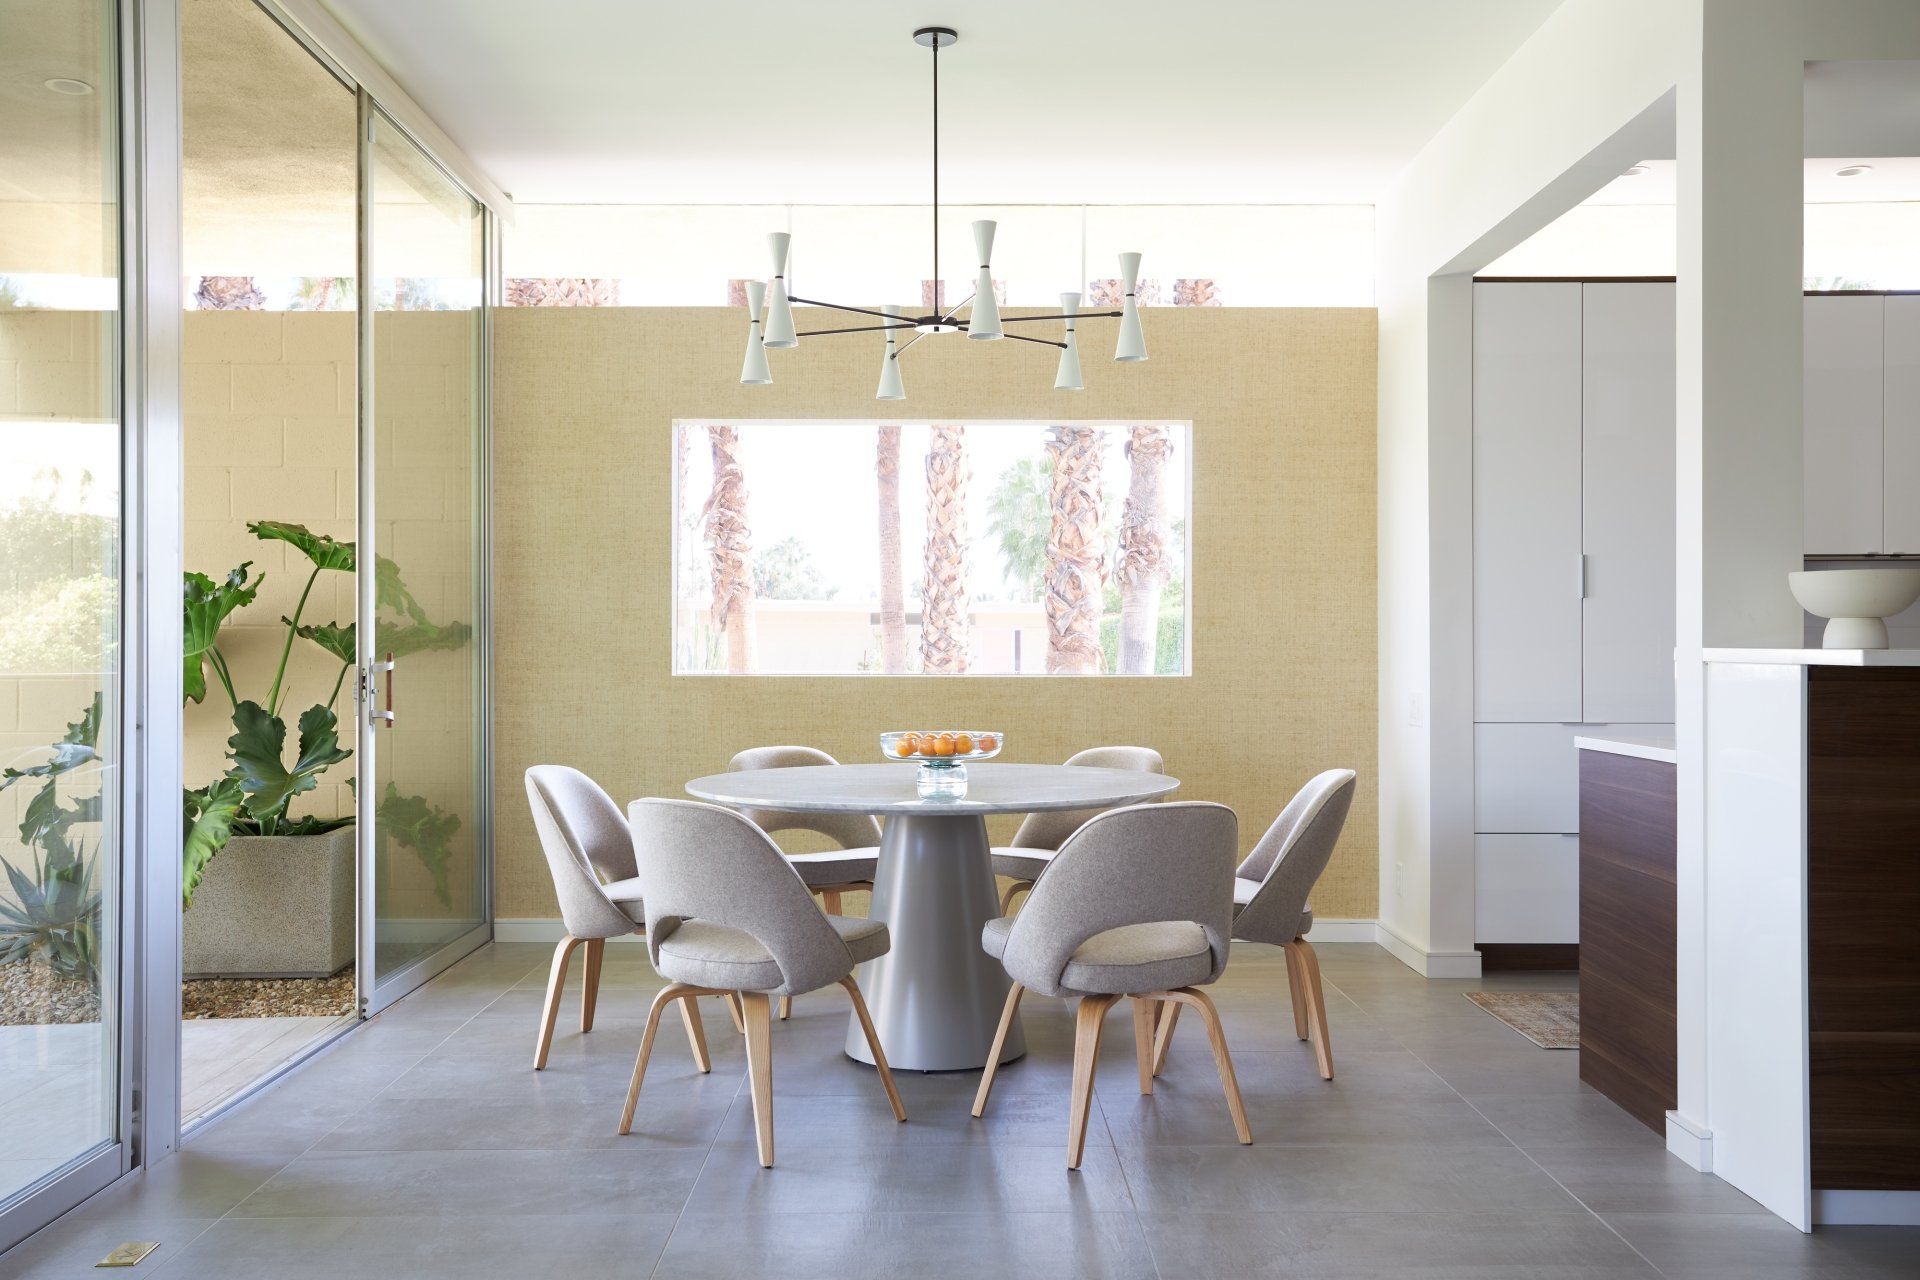 Dining room of a house in palm springs designed by Dakota Designworks